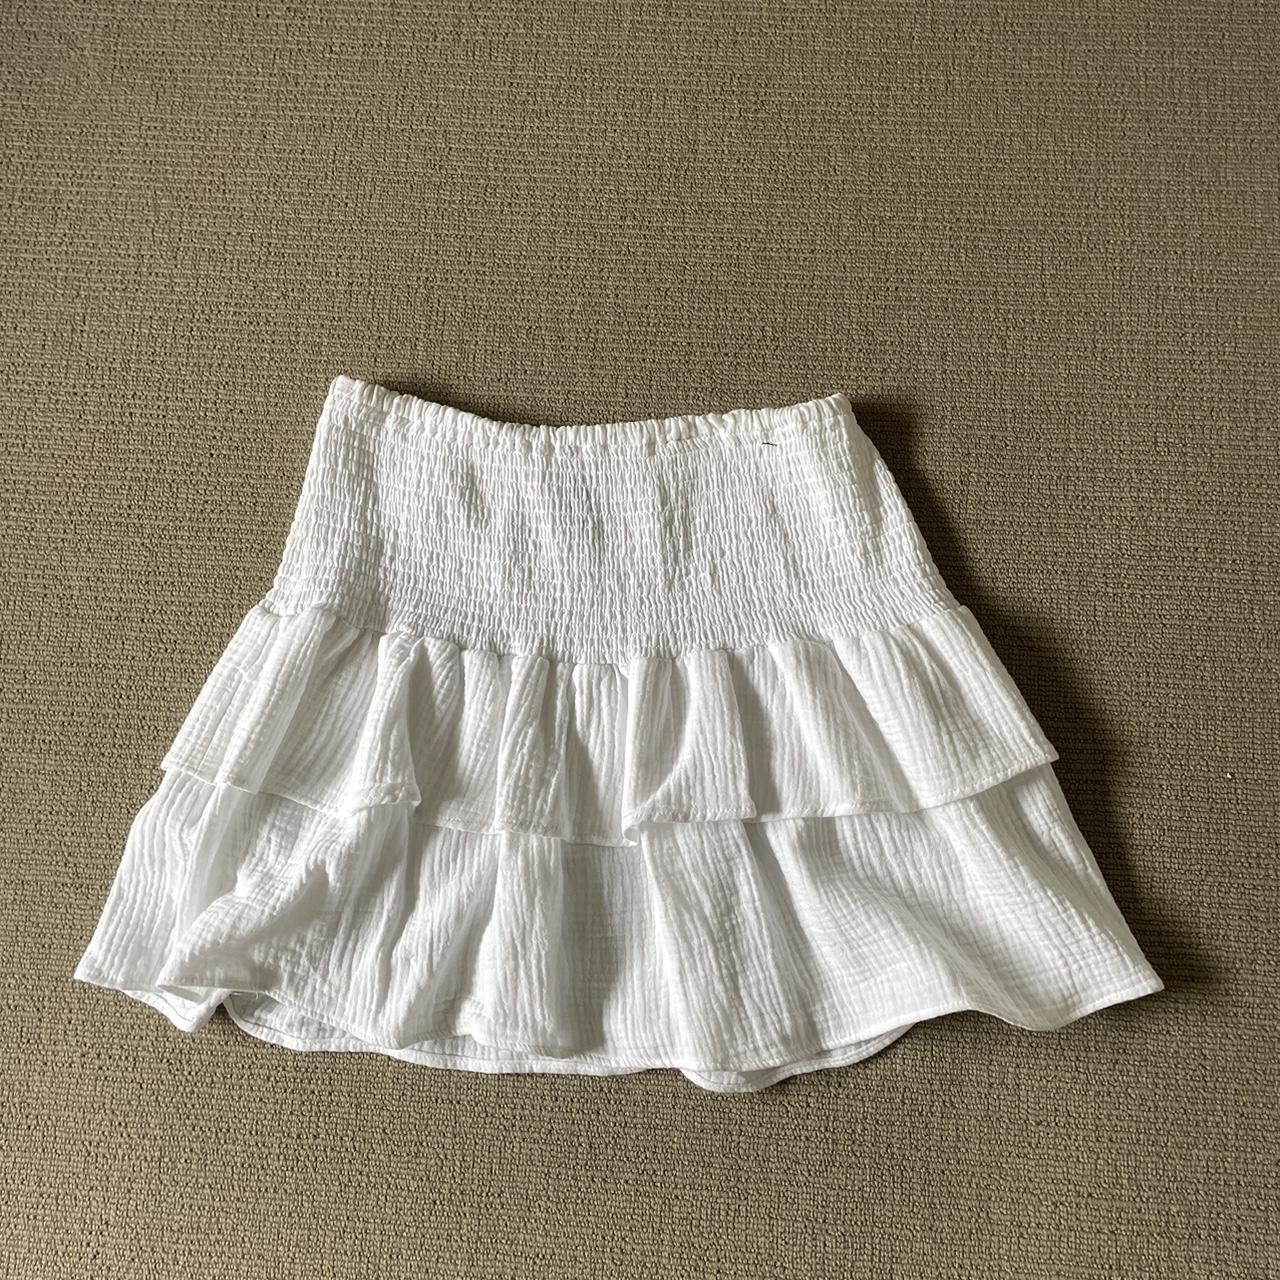 White layered skirt - comfortable large elastic band... - Depop